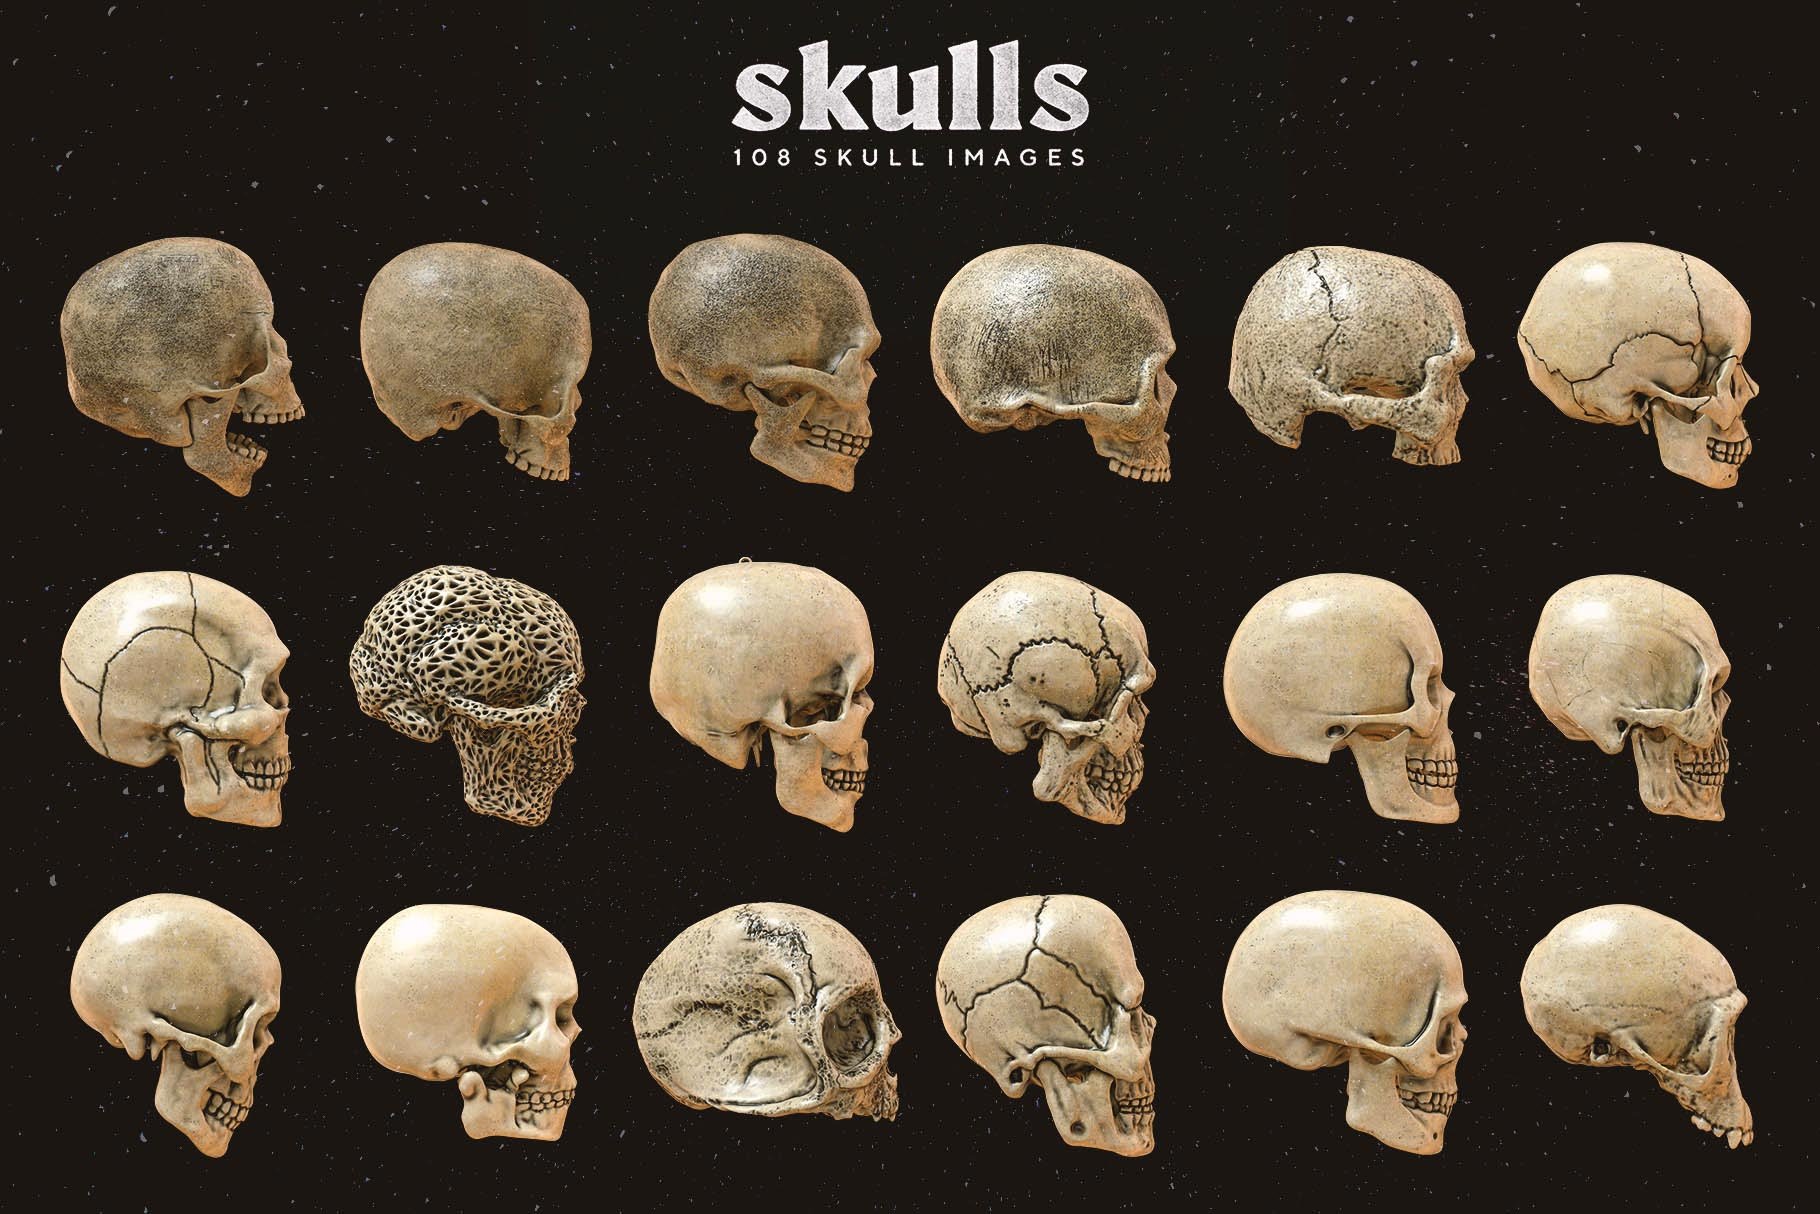 Skulls 108个高分辨率骷髅头骨逼真骨骼金属纹理PNG素材 图片素材 第2张